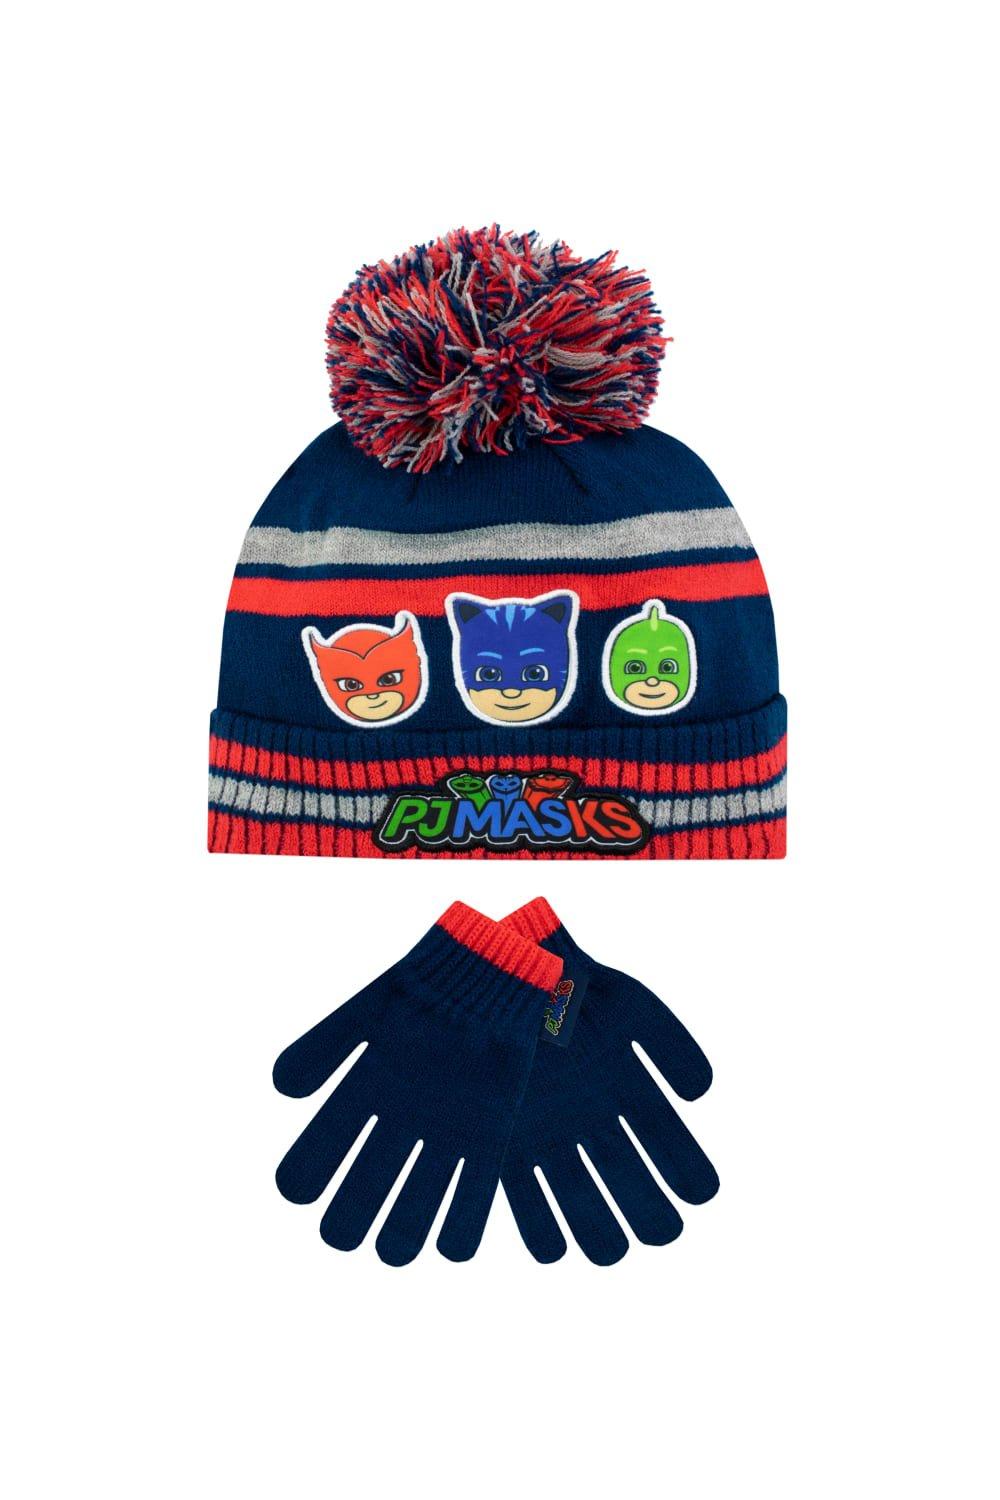 Детский комплект шапки и перчаток PJ Masks, синий